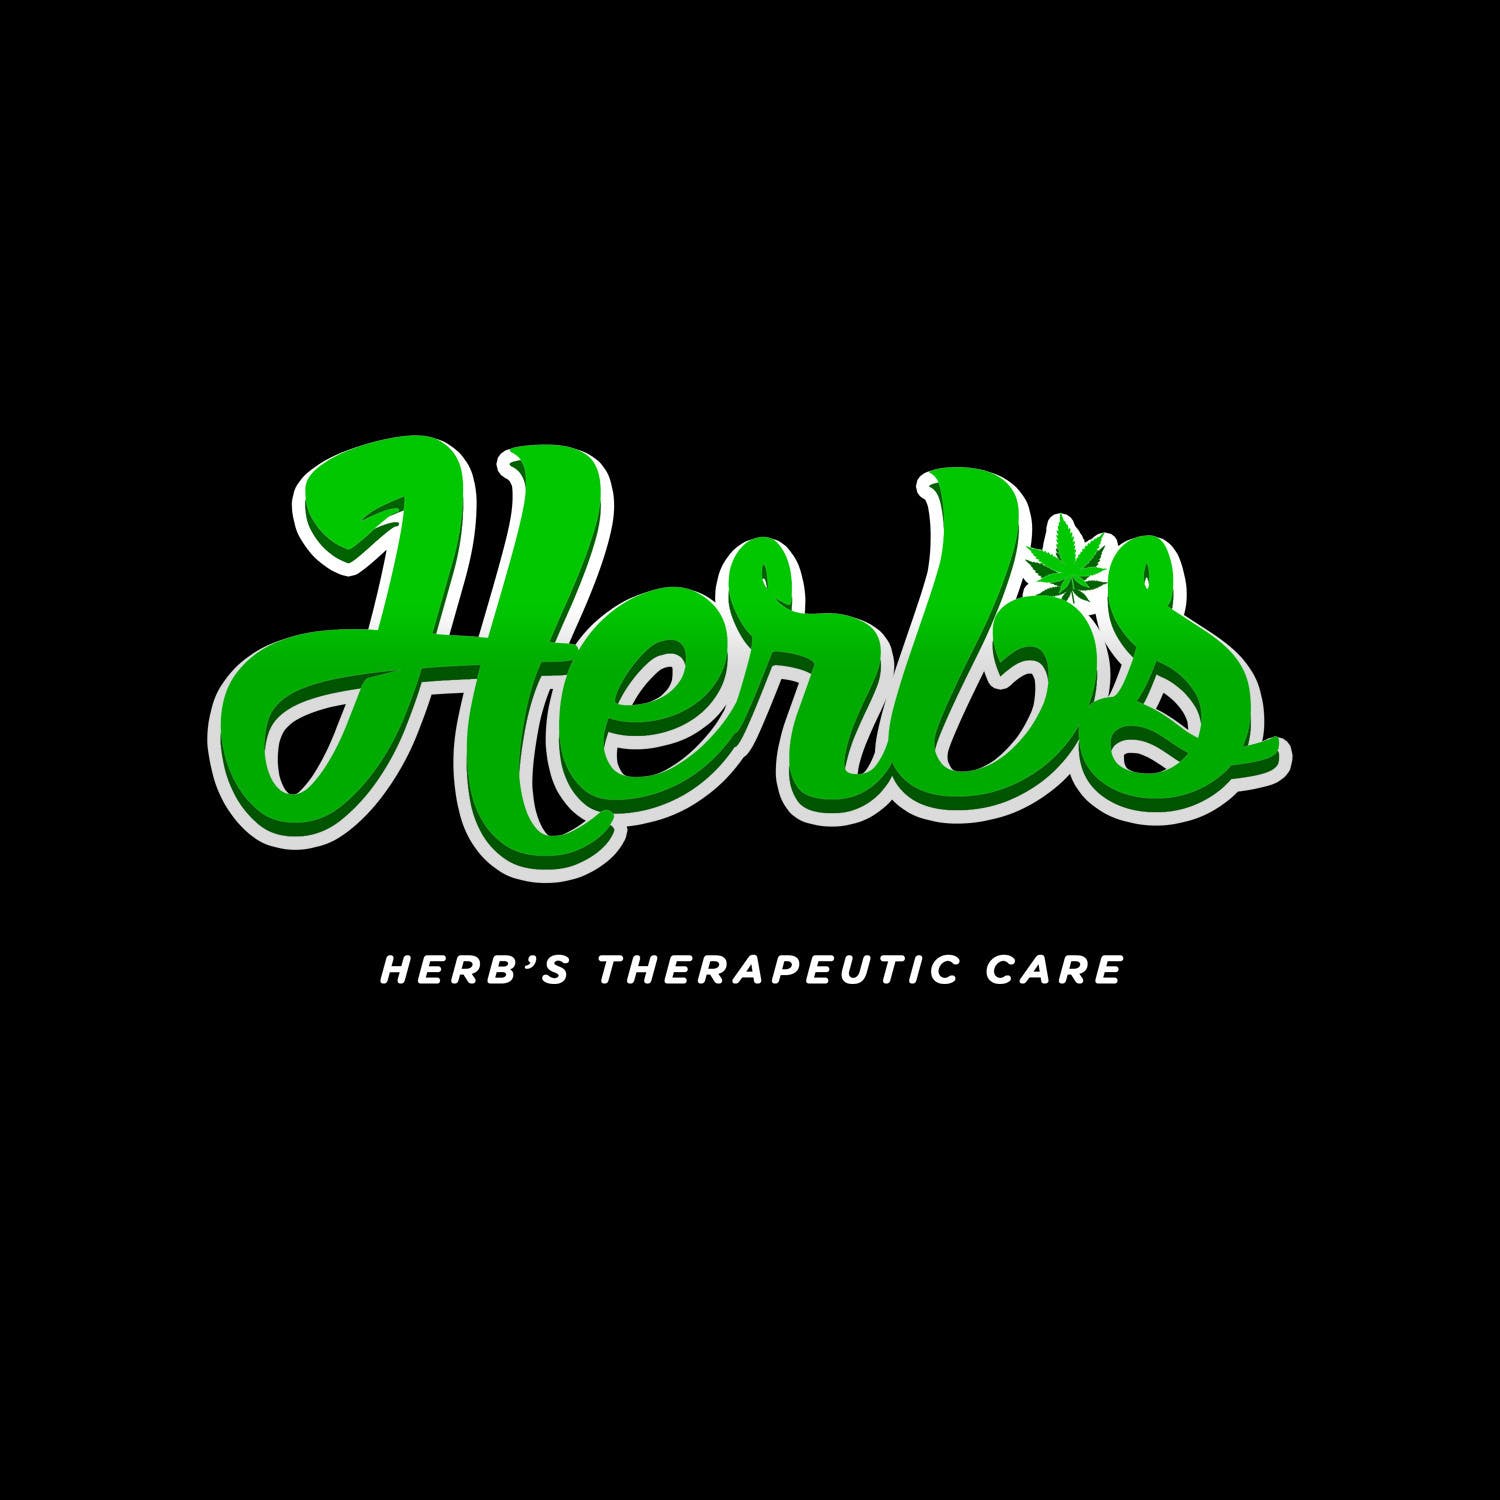 Herbs San Jose - Medical Marijuana Doctors - Cannabizme.com